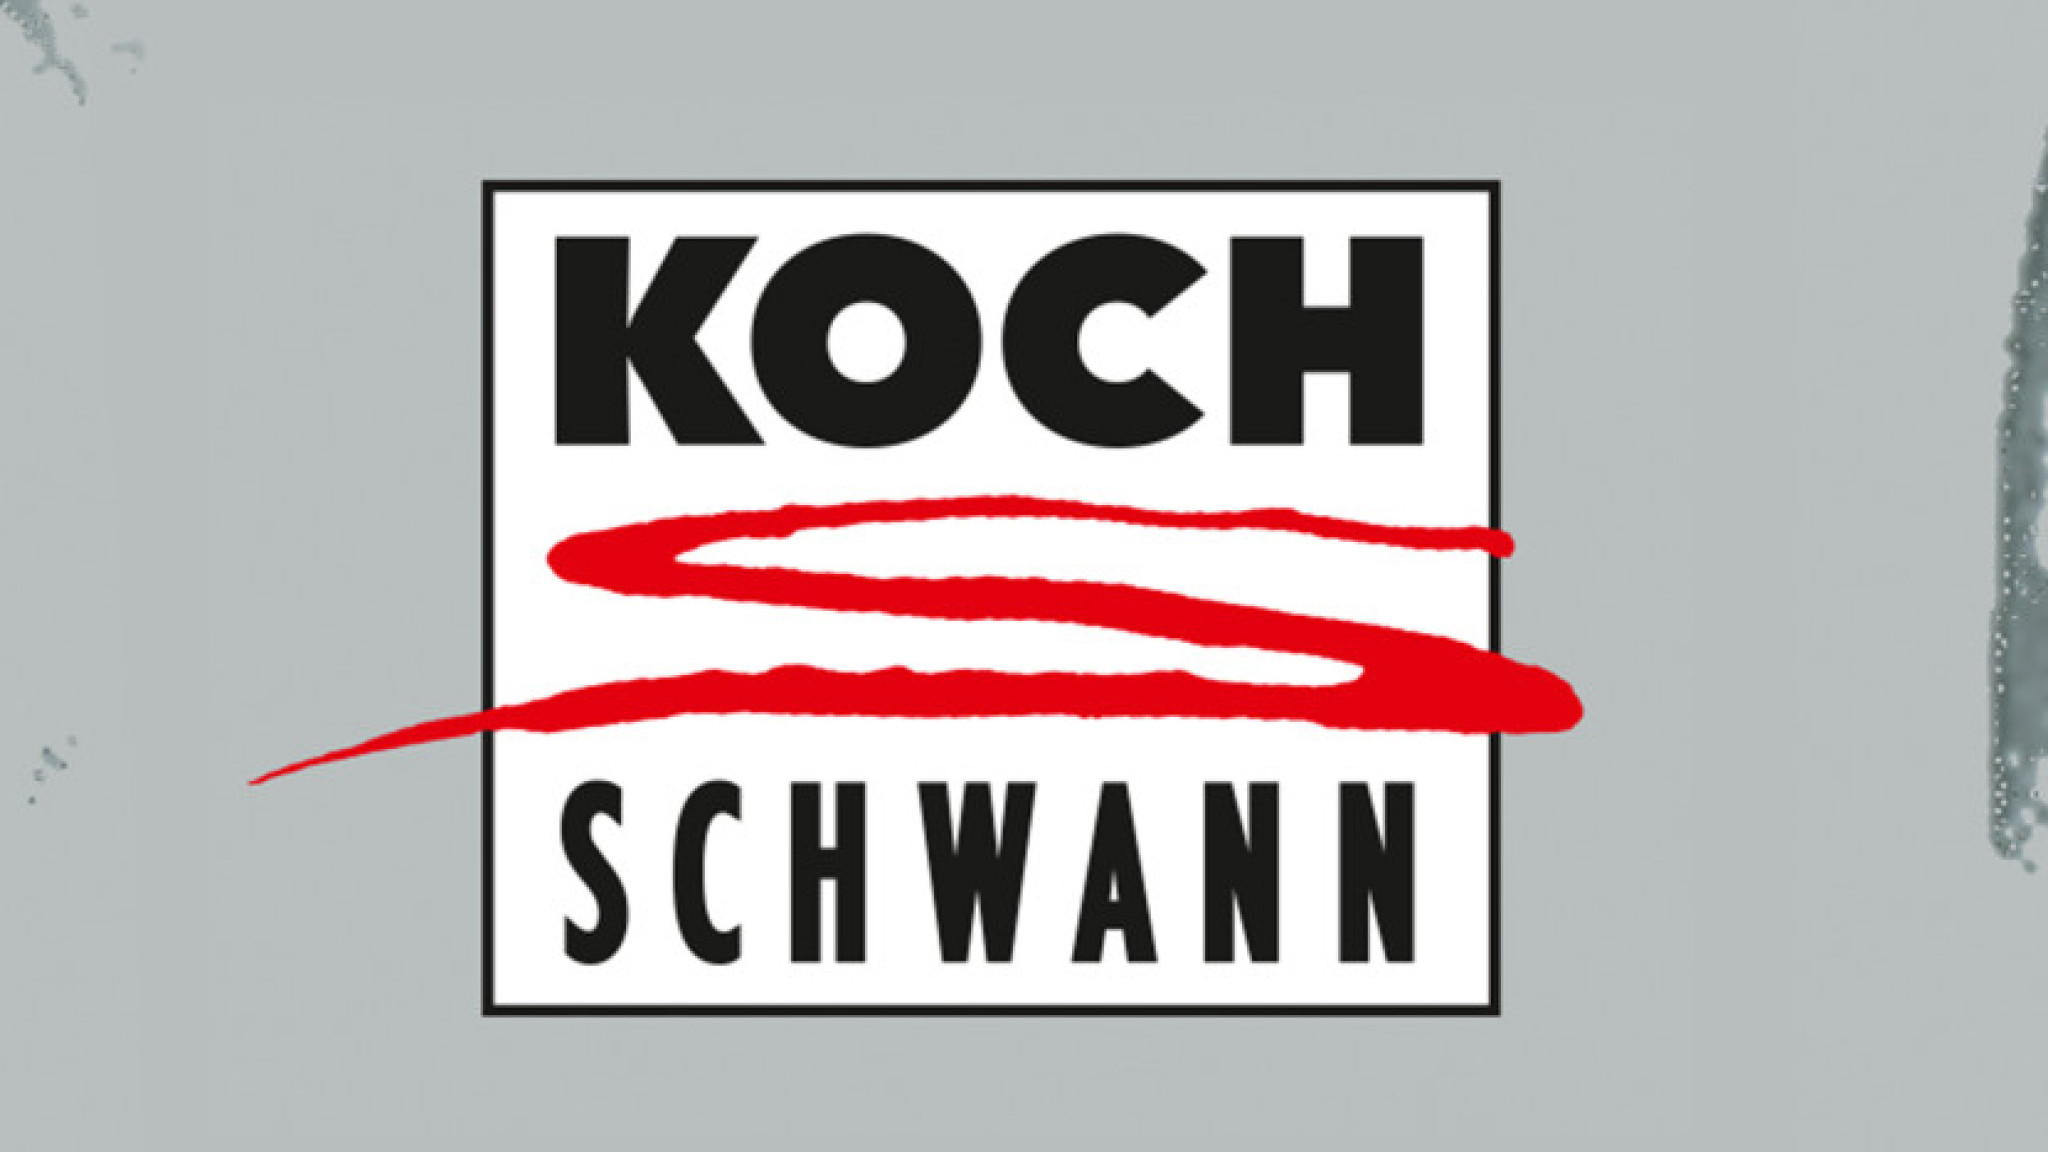 koch-schwann-hero-banner.jpg